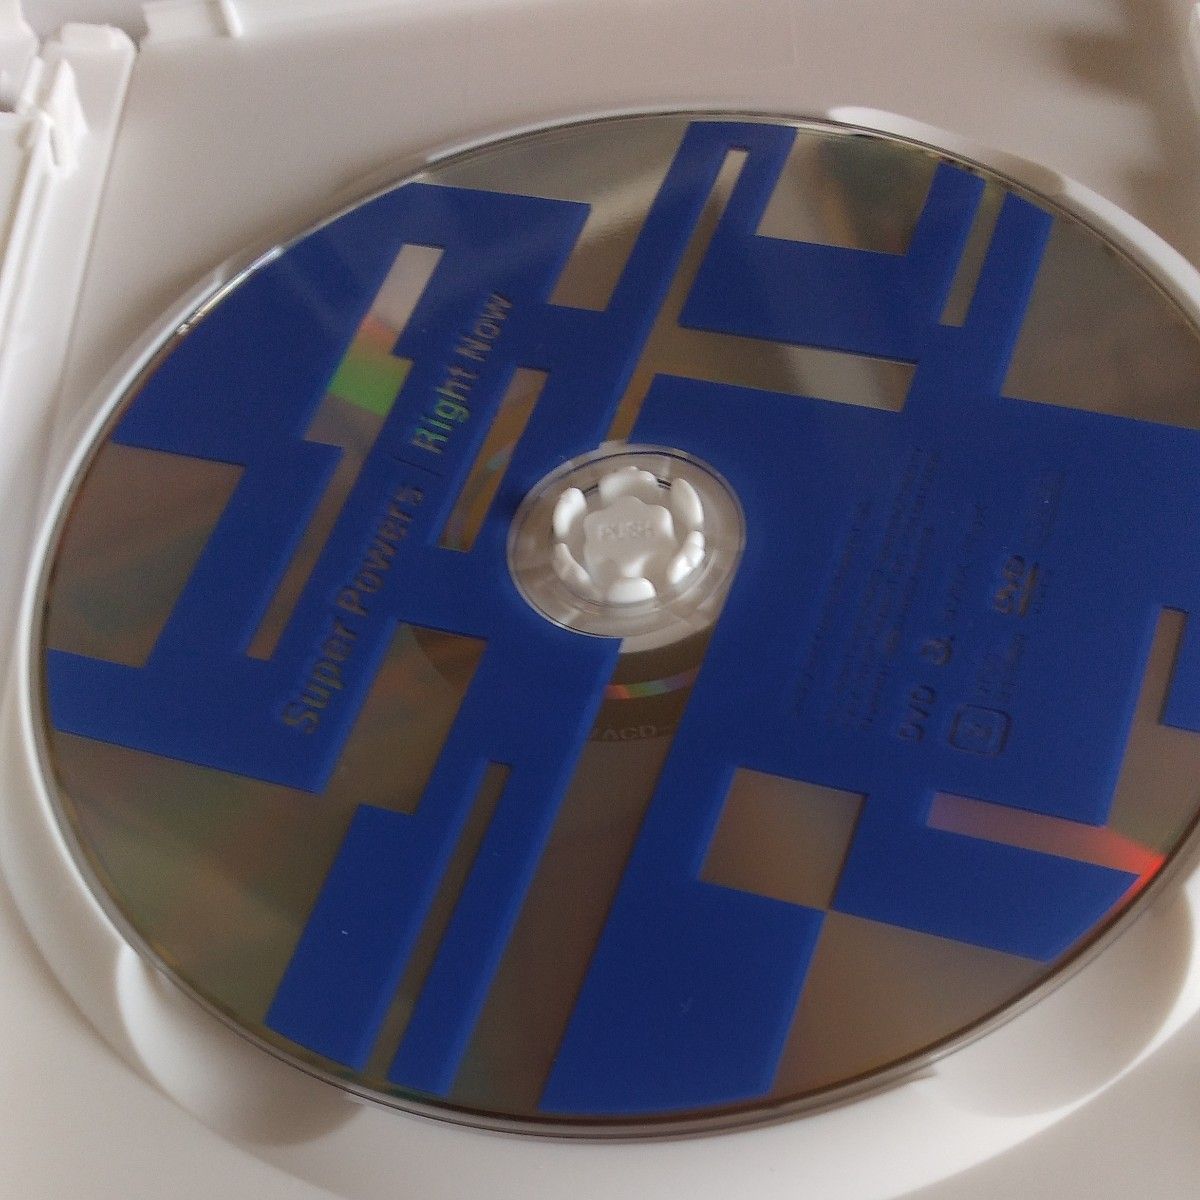 Super Powers/Right Now (CD+DVD) (初回盤B)